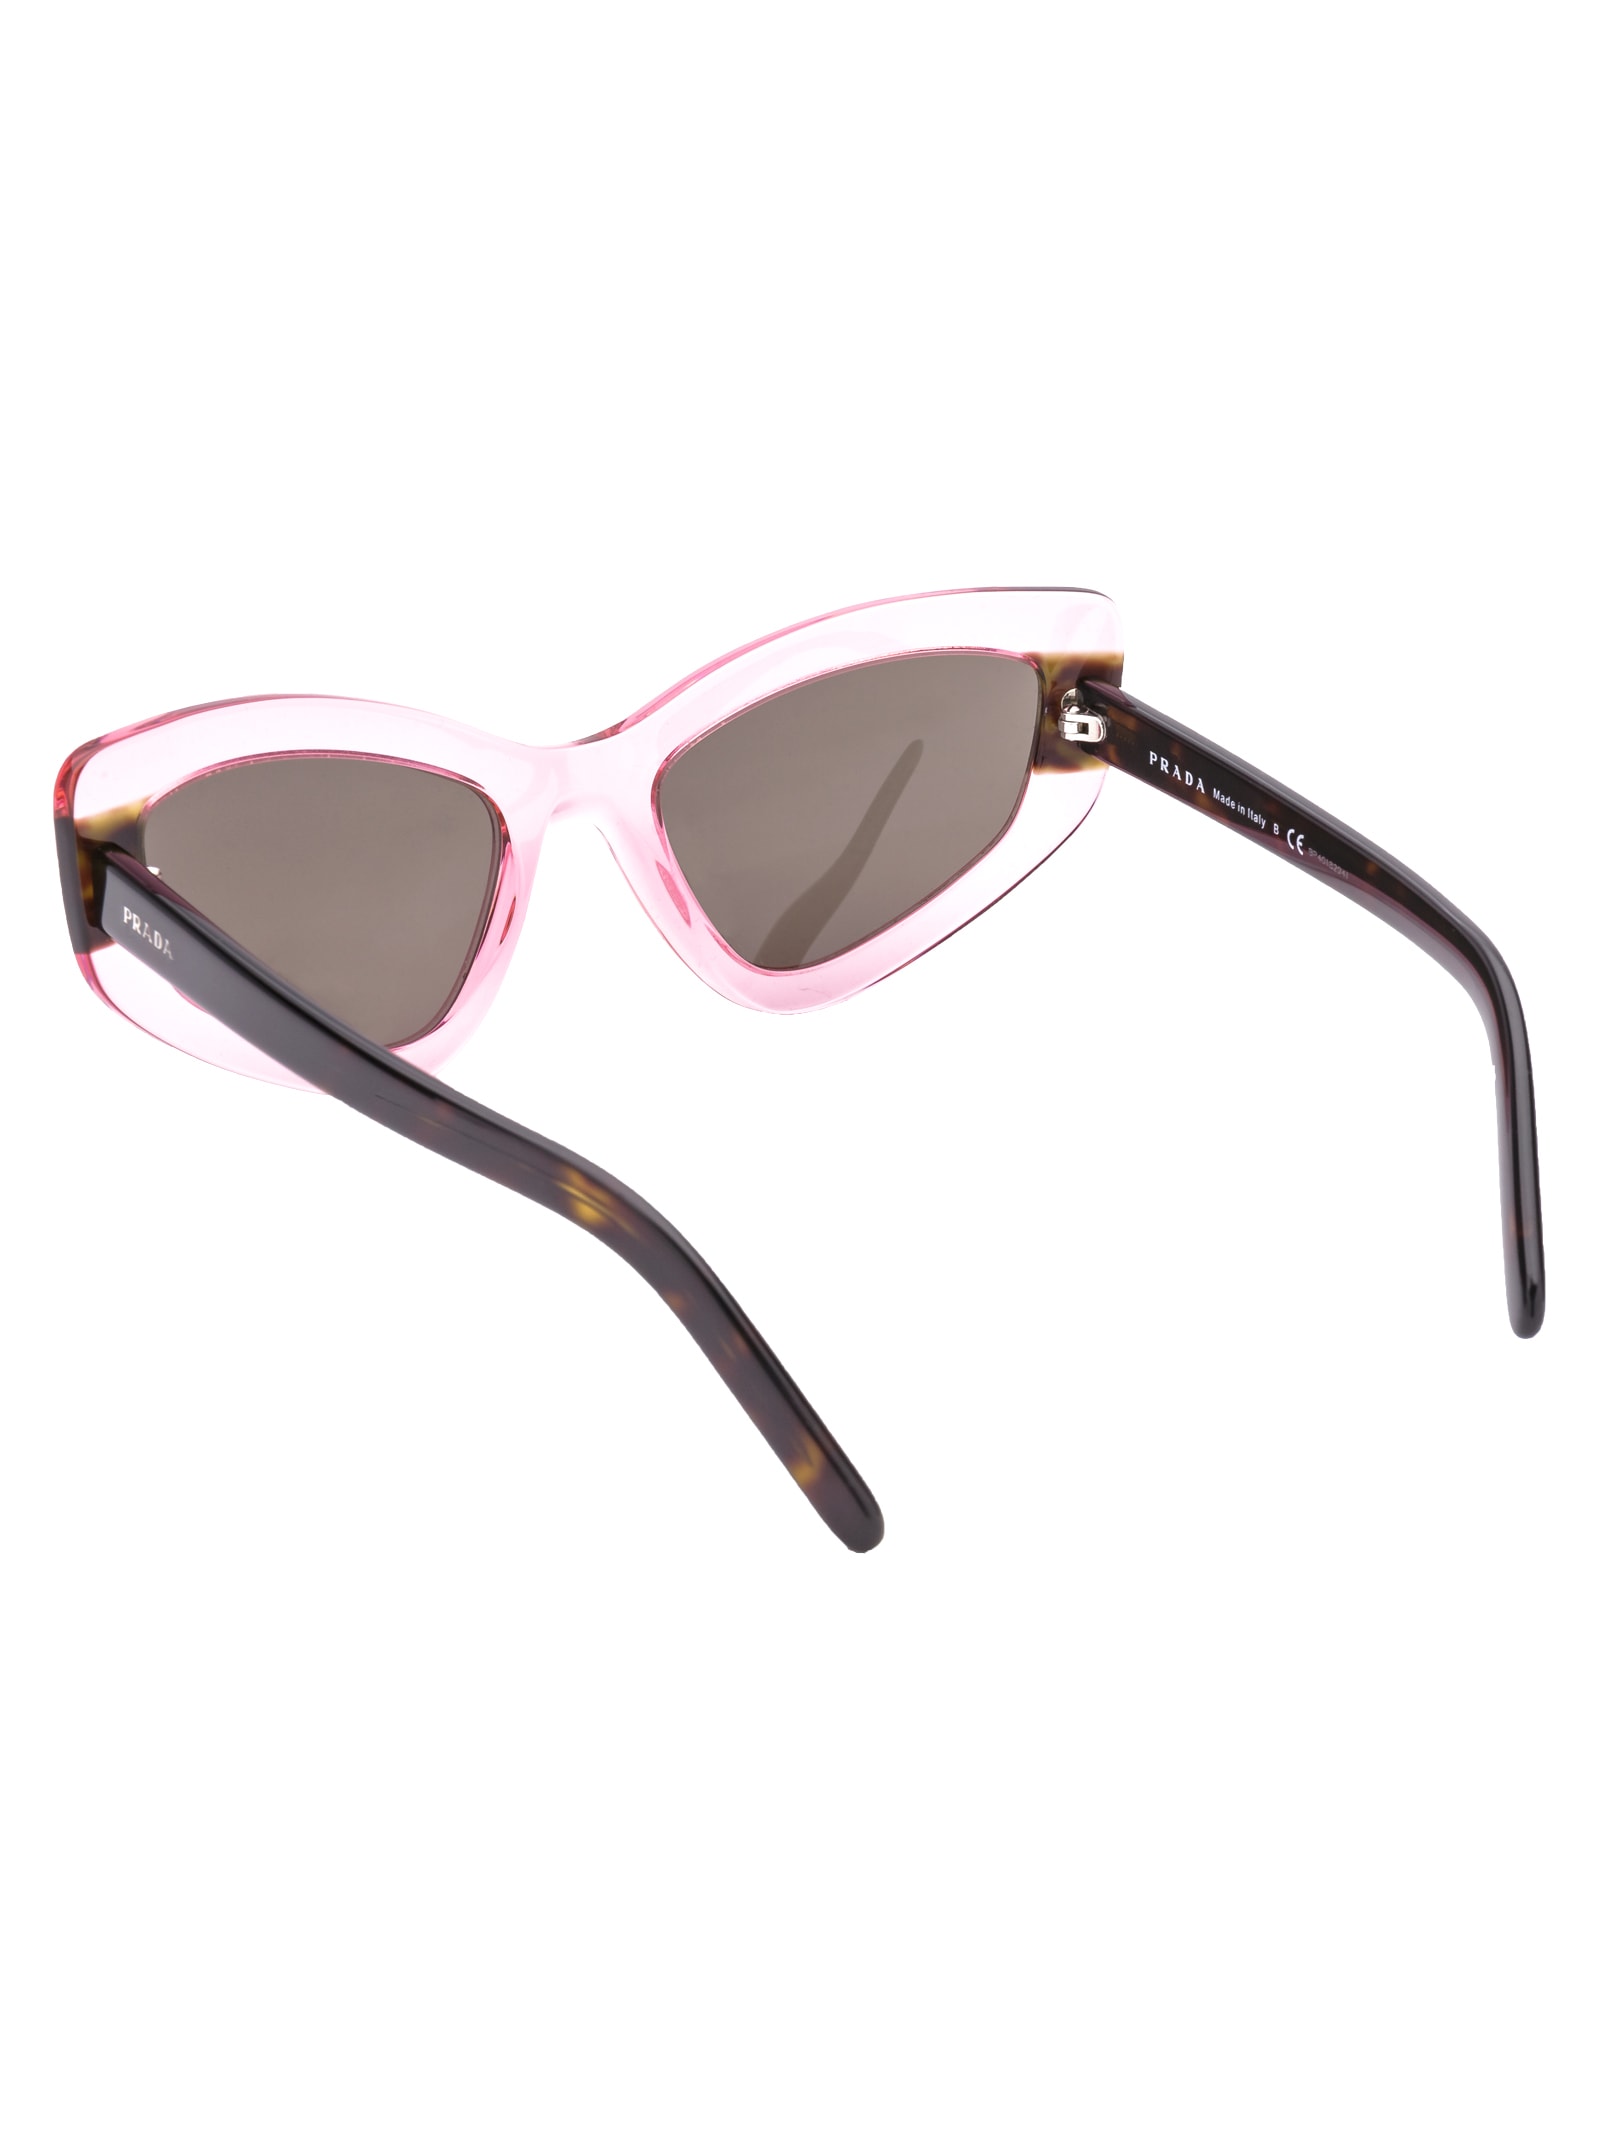 prada sunglasses with pink arms